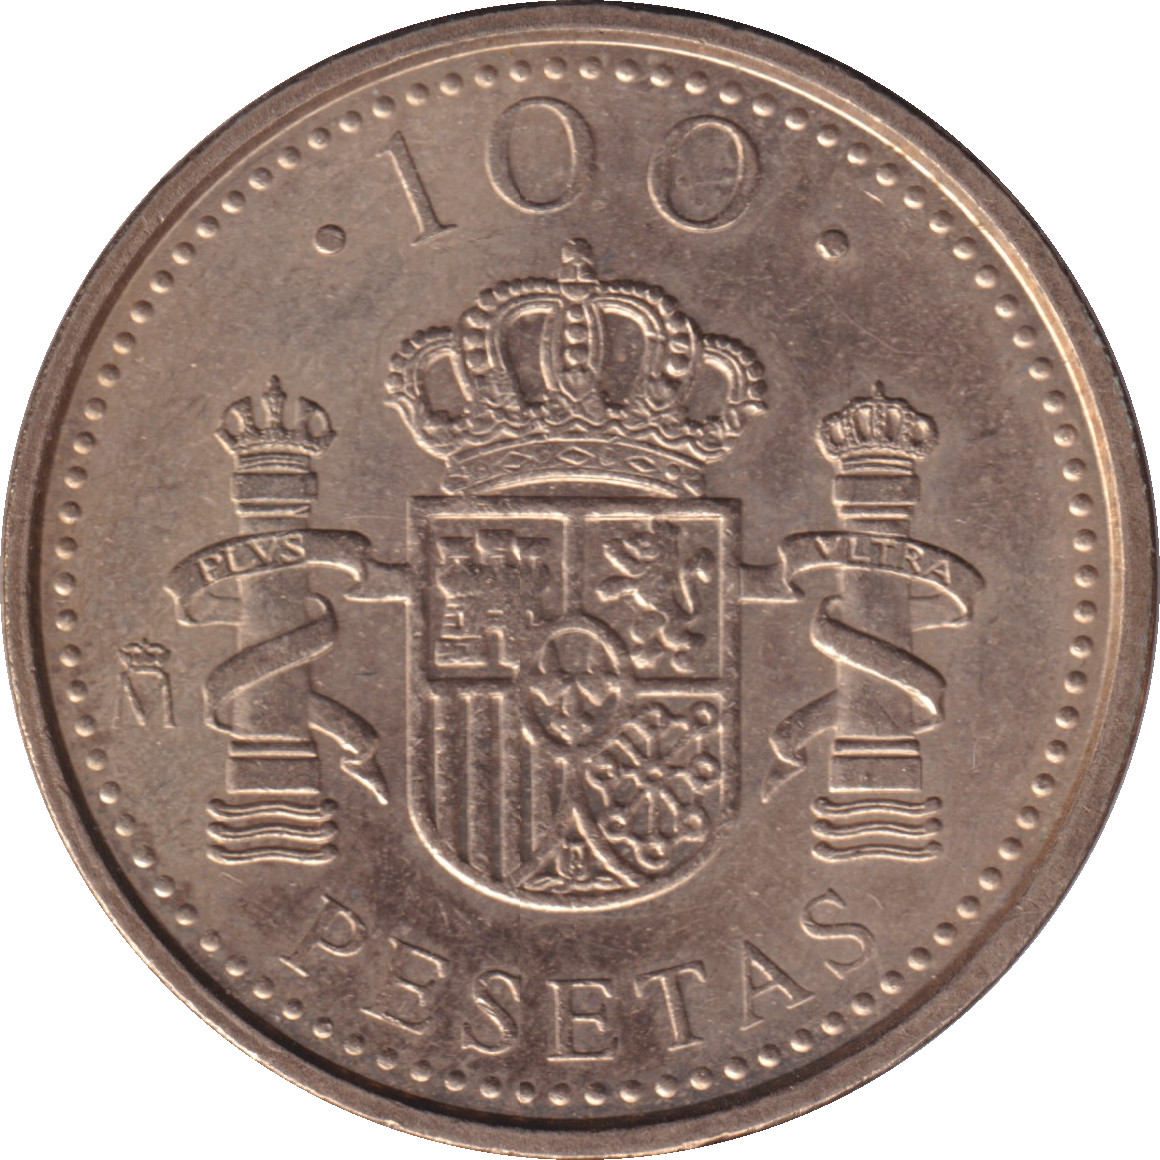 100 pesetas - Juan Carlos I - Tête agée